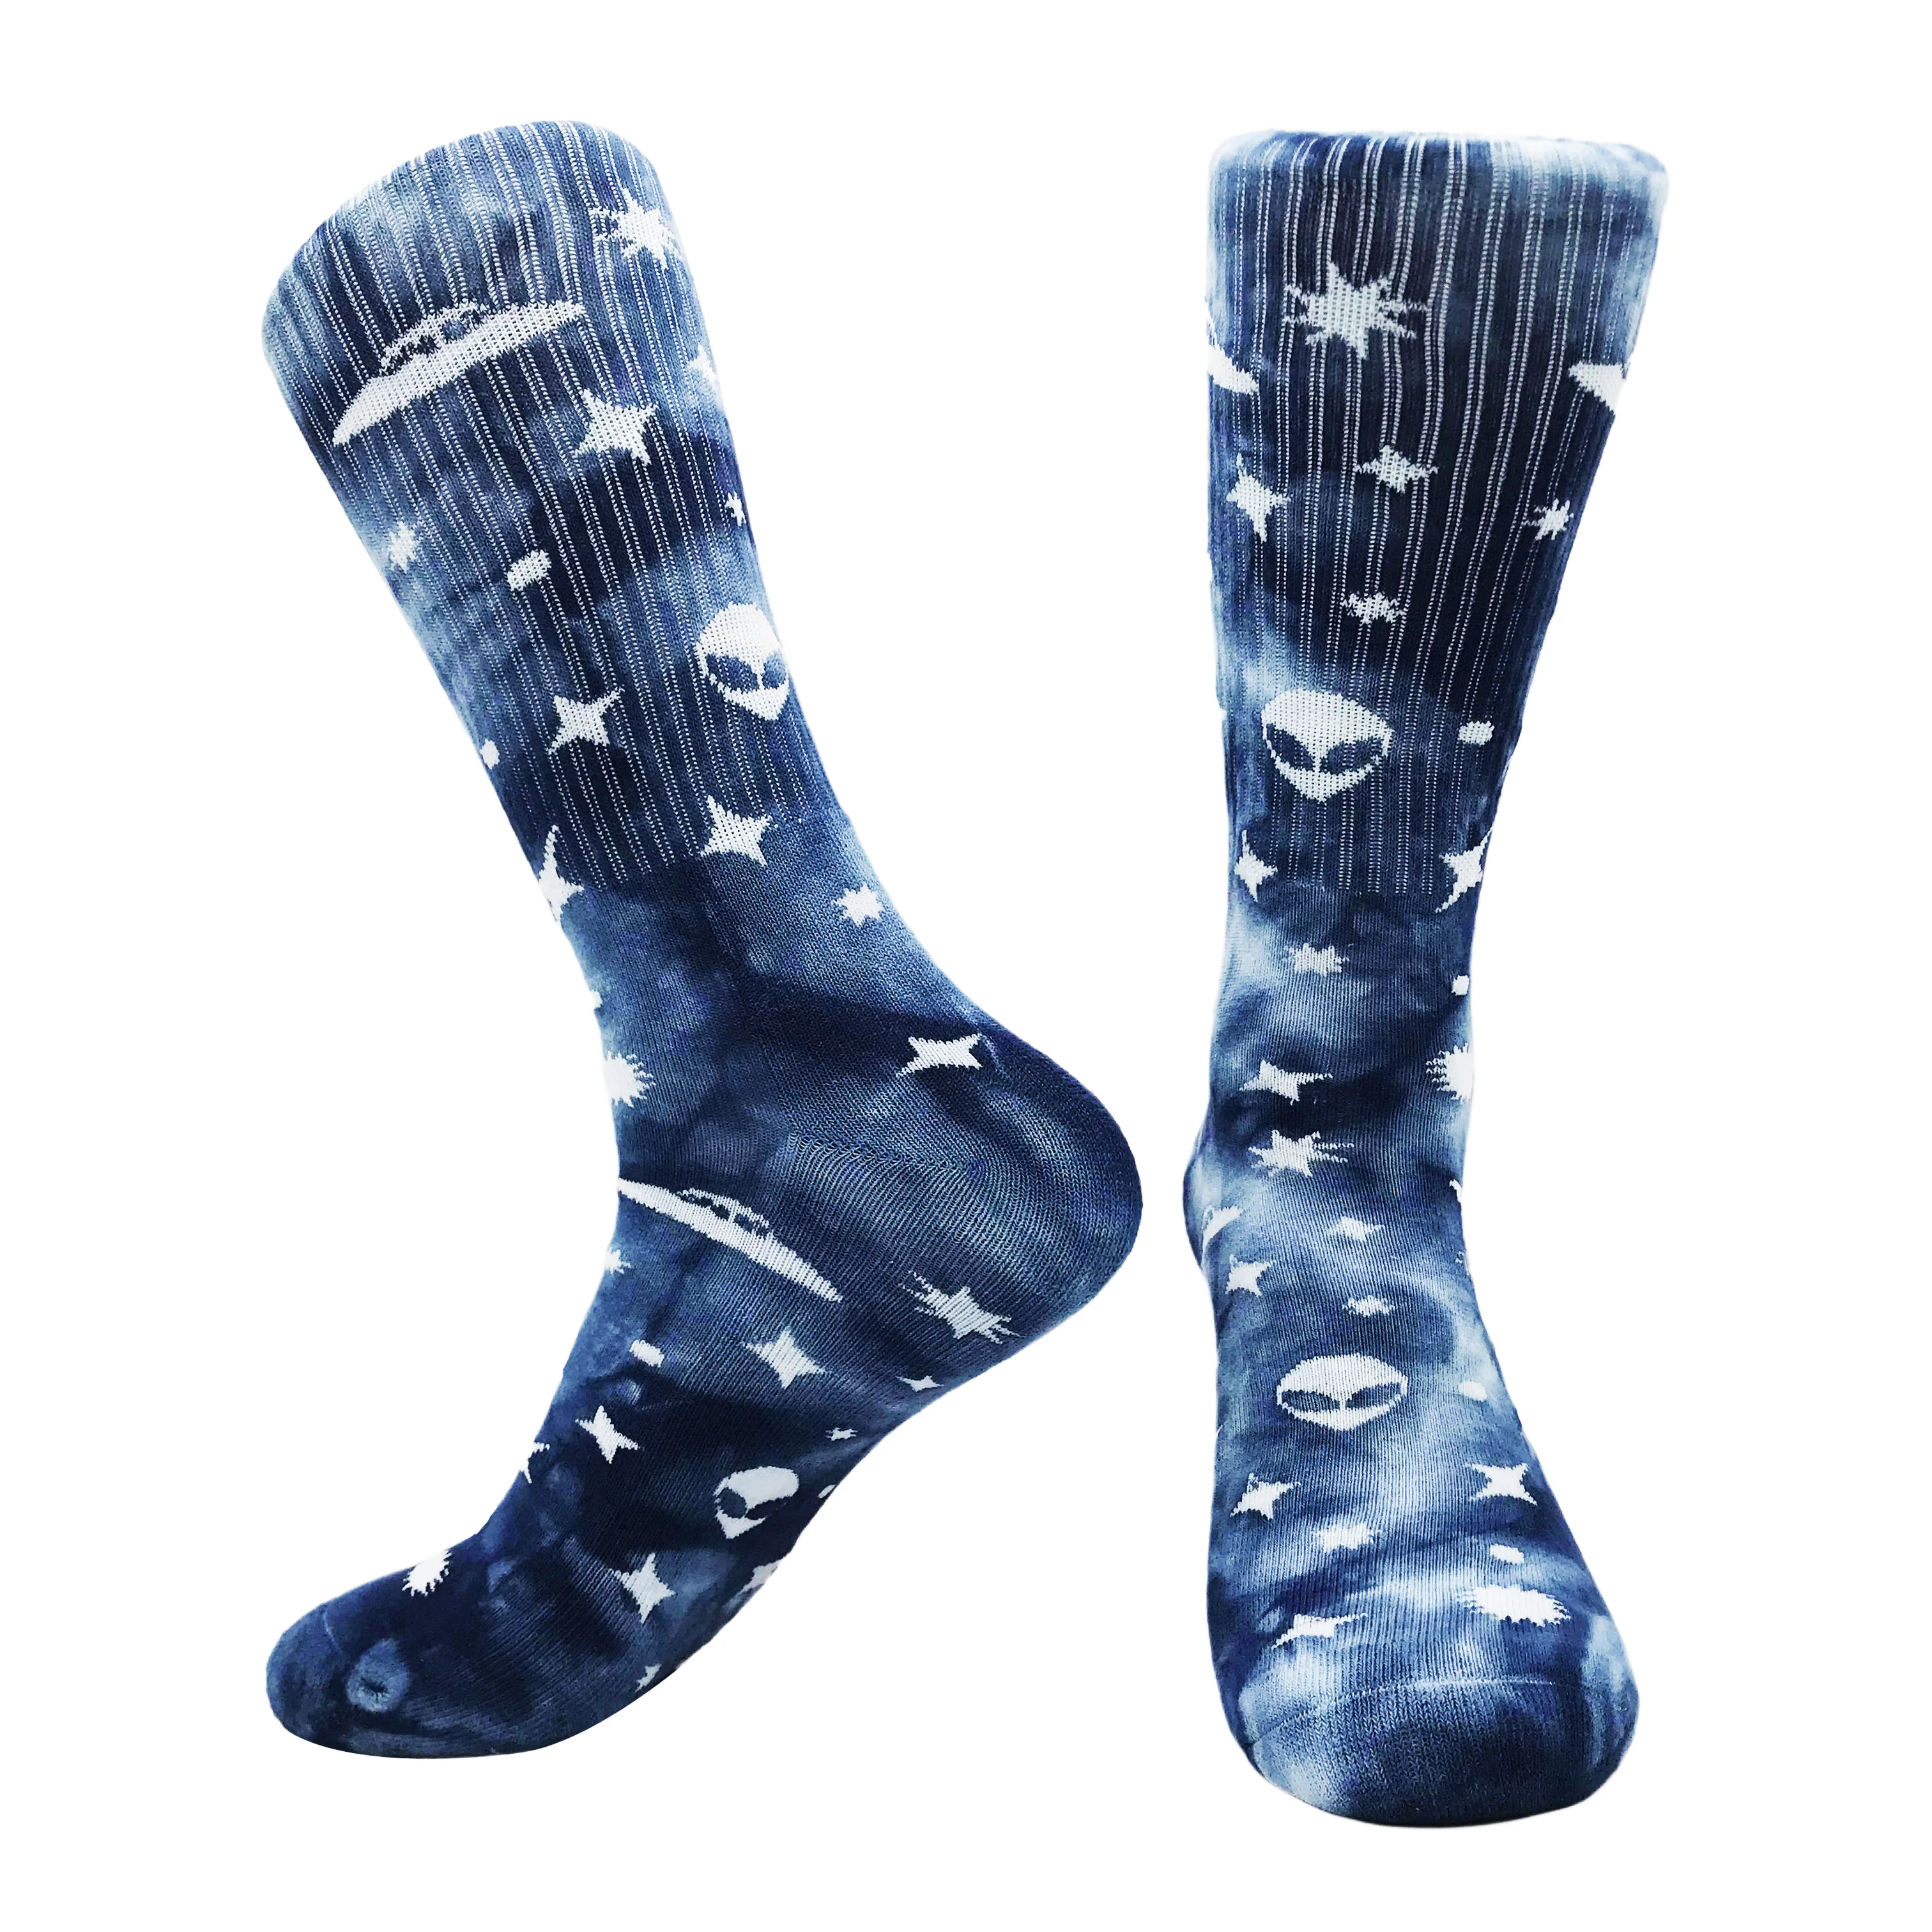 2023 new cotton men's socks creative tie-dye cool fun party skateboard women's socks personality style student socks